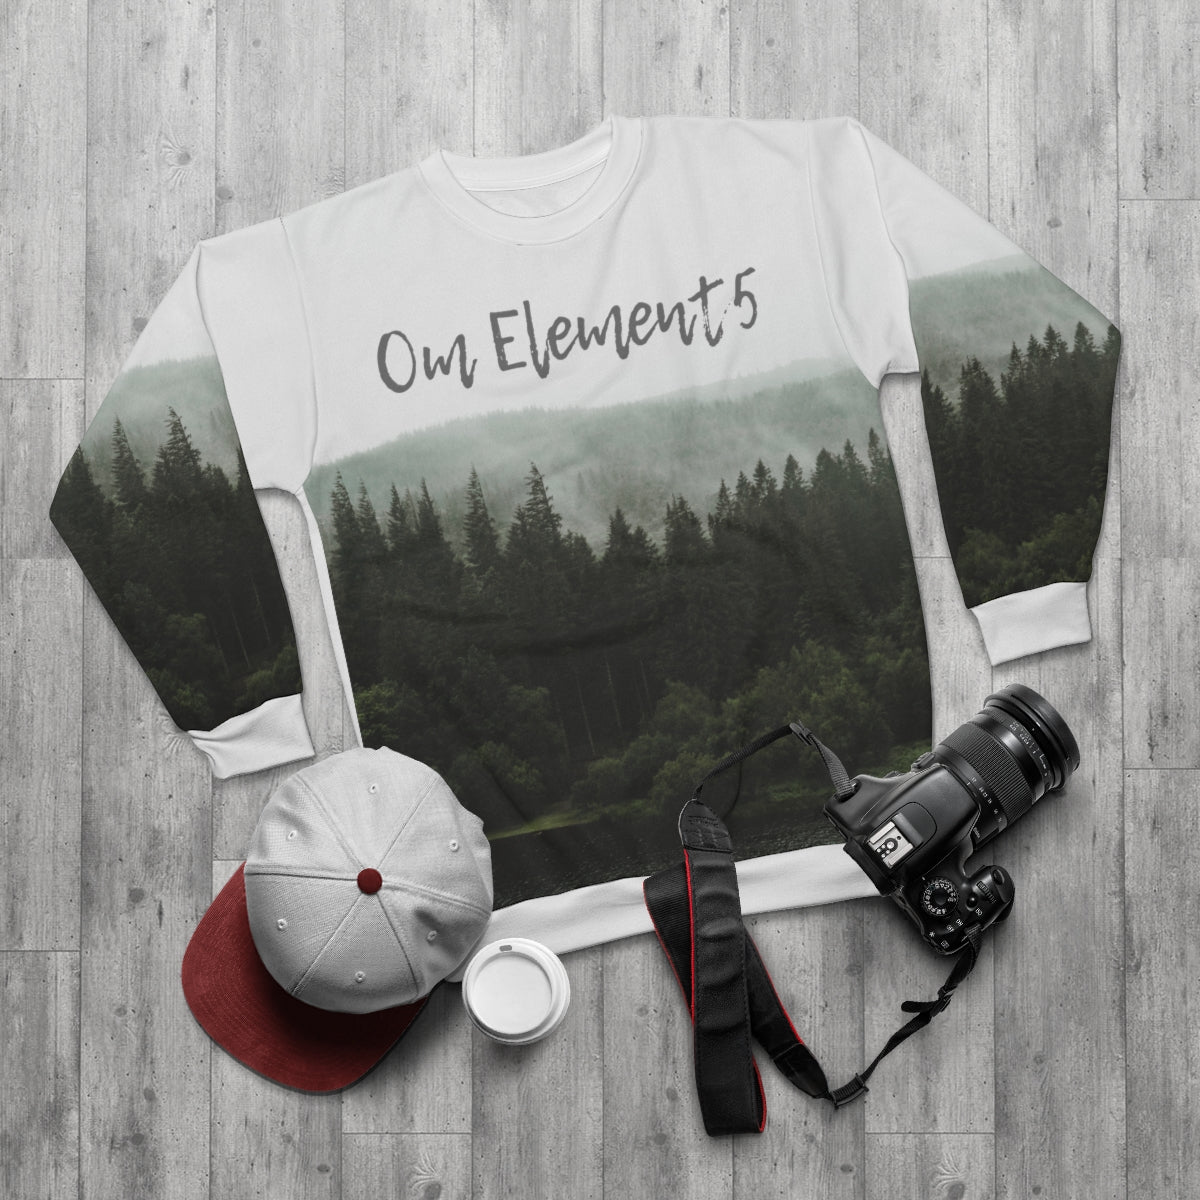 Om Element5 Unisex Sweatshirt: "Wear Nature Meets Mind"